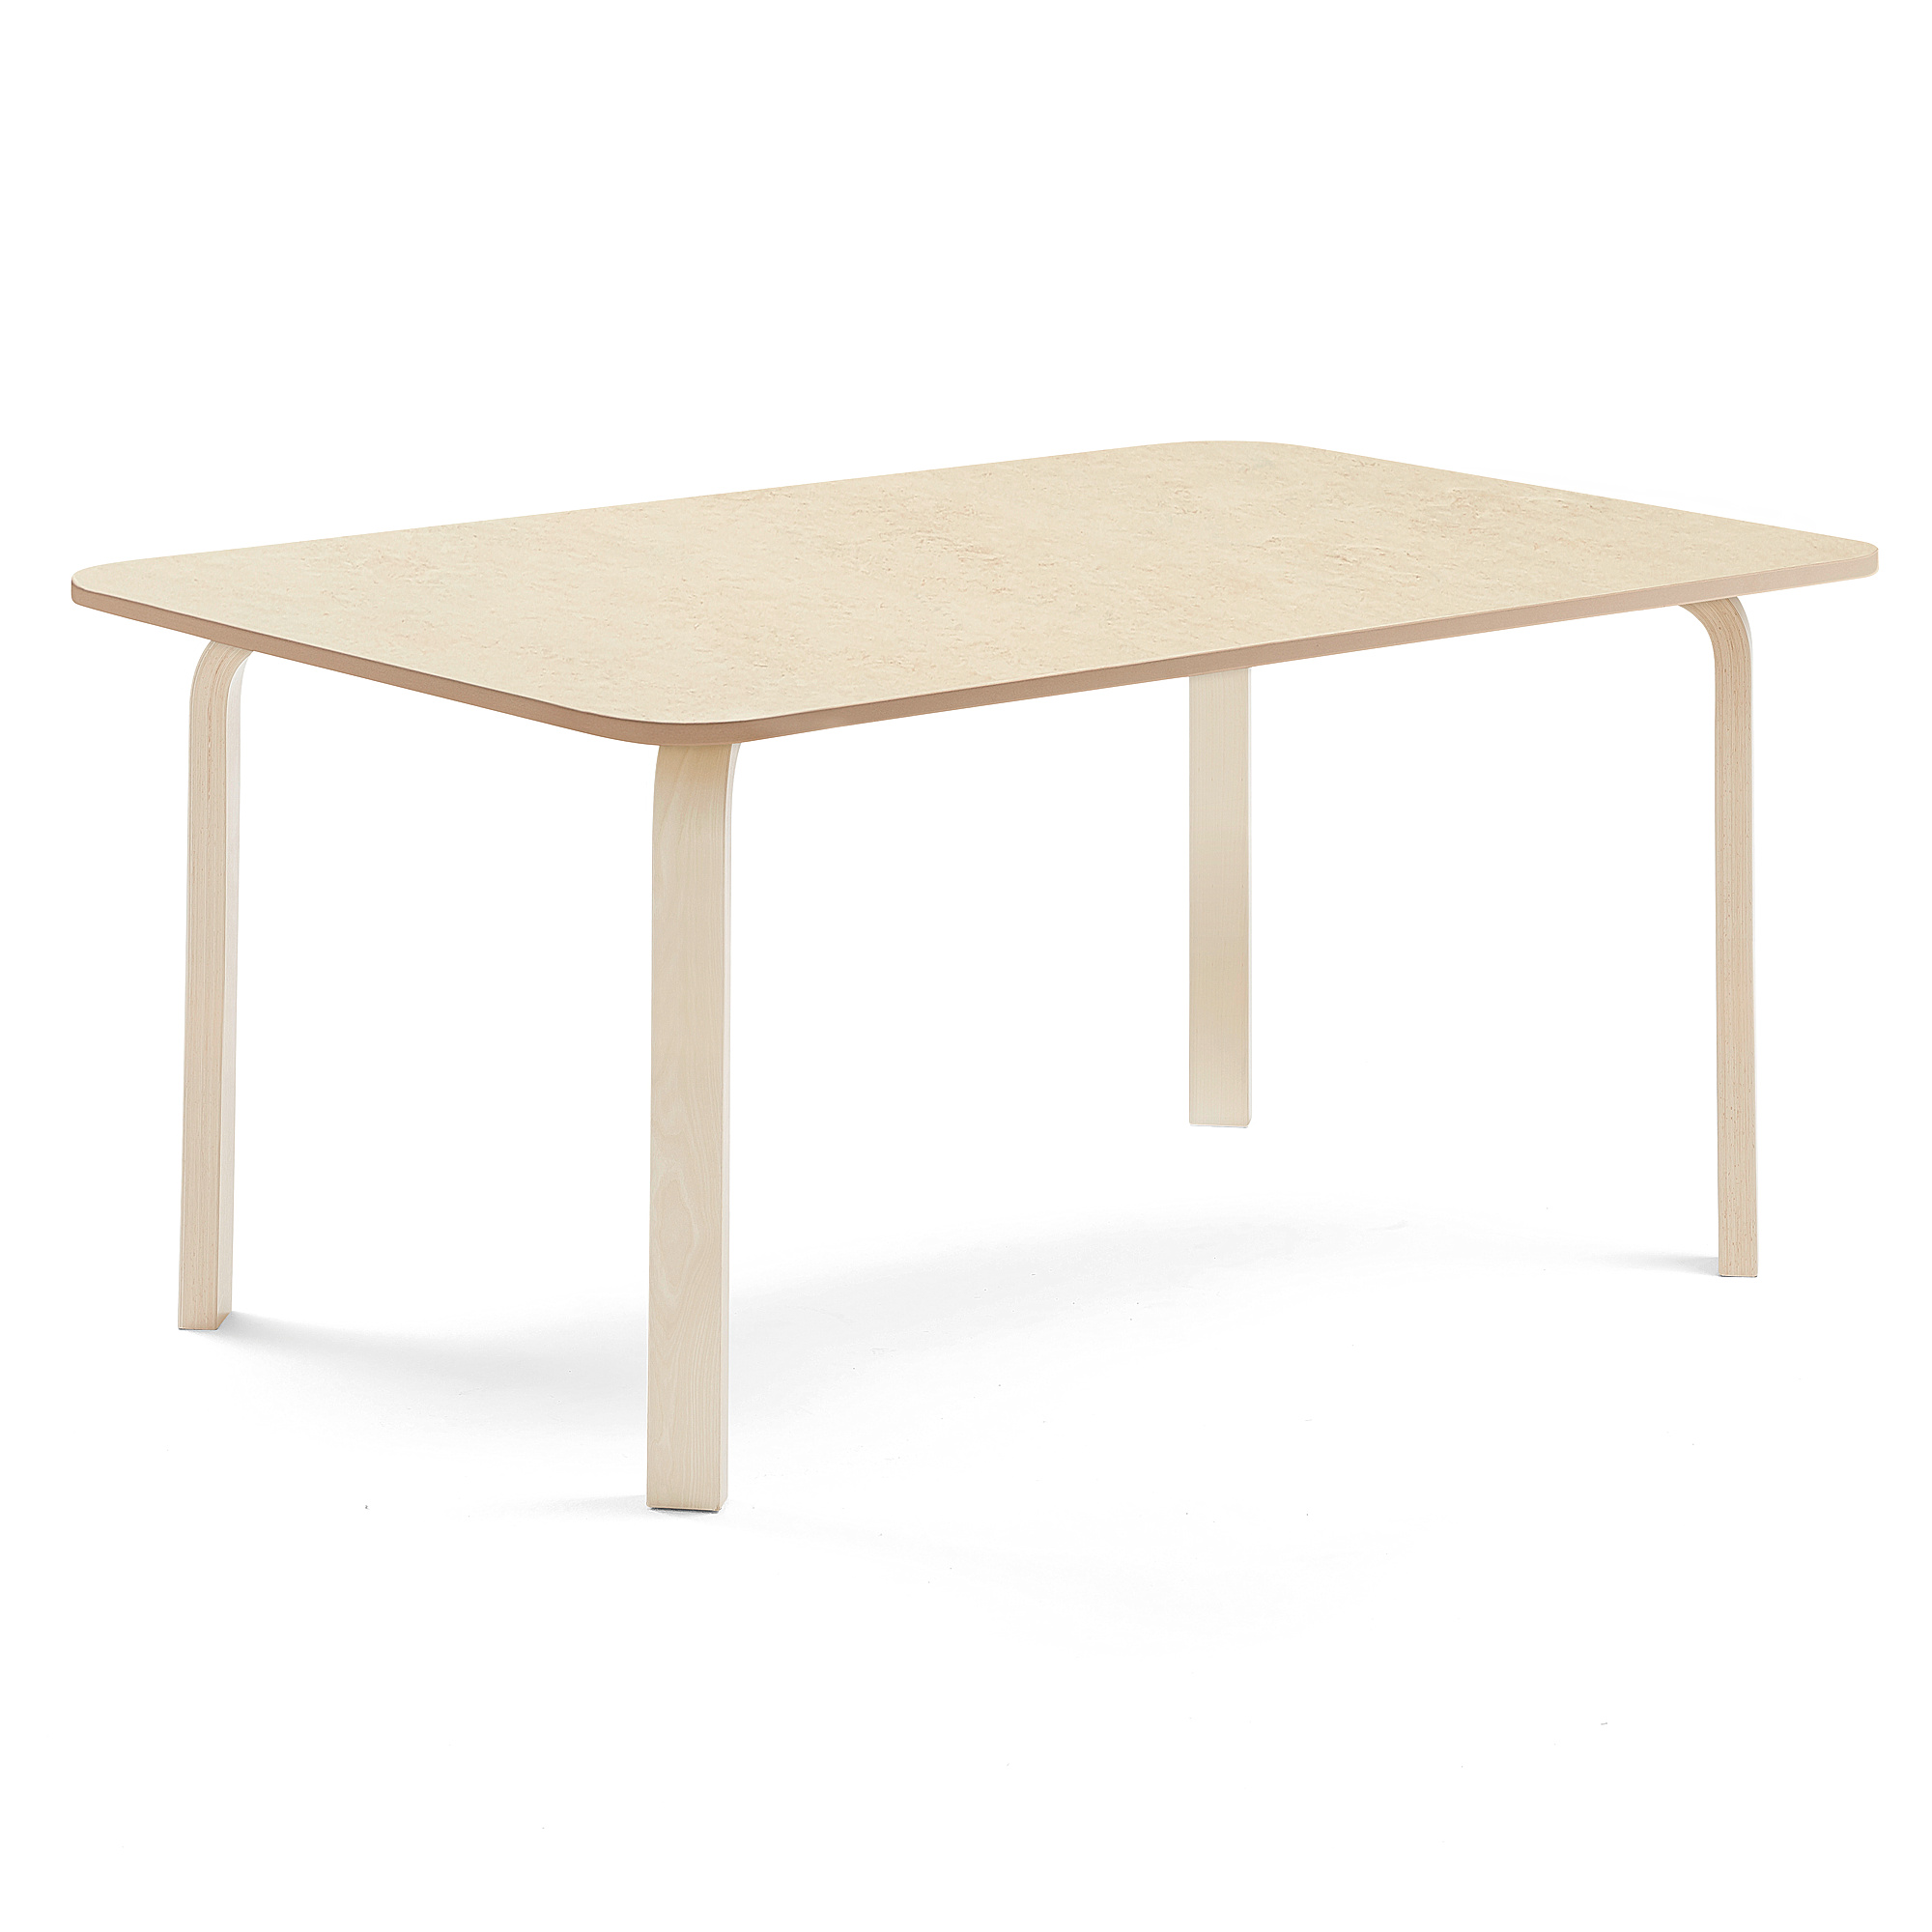 Stůl ELTON, 1800x800x640 mm, bříza, akustické linoleum, béžová